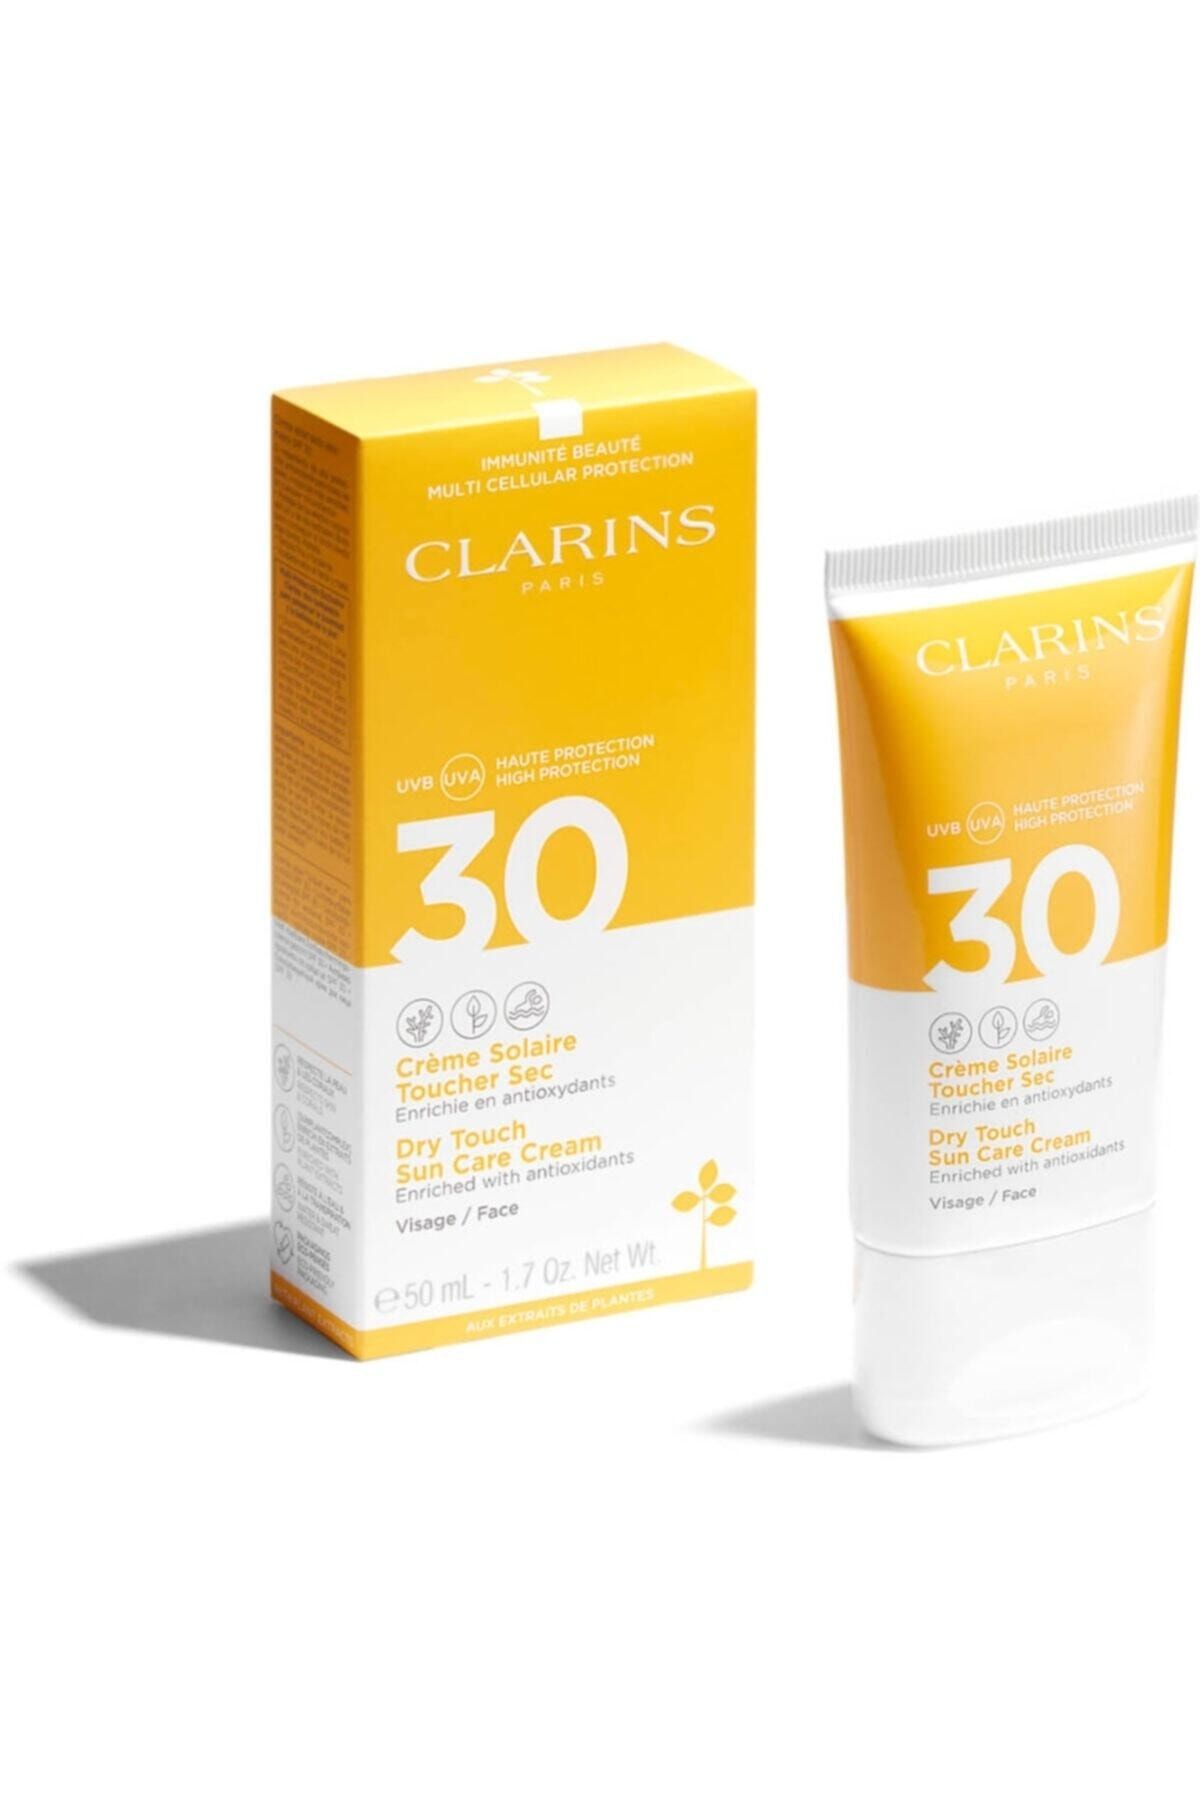 Clarins Dry Touch Facial Güneş Kremi Spf 30